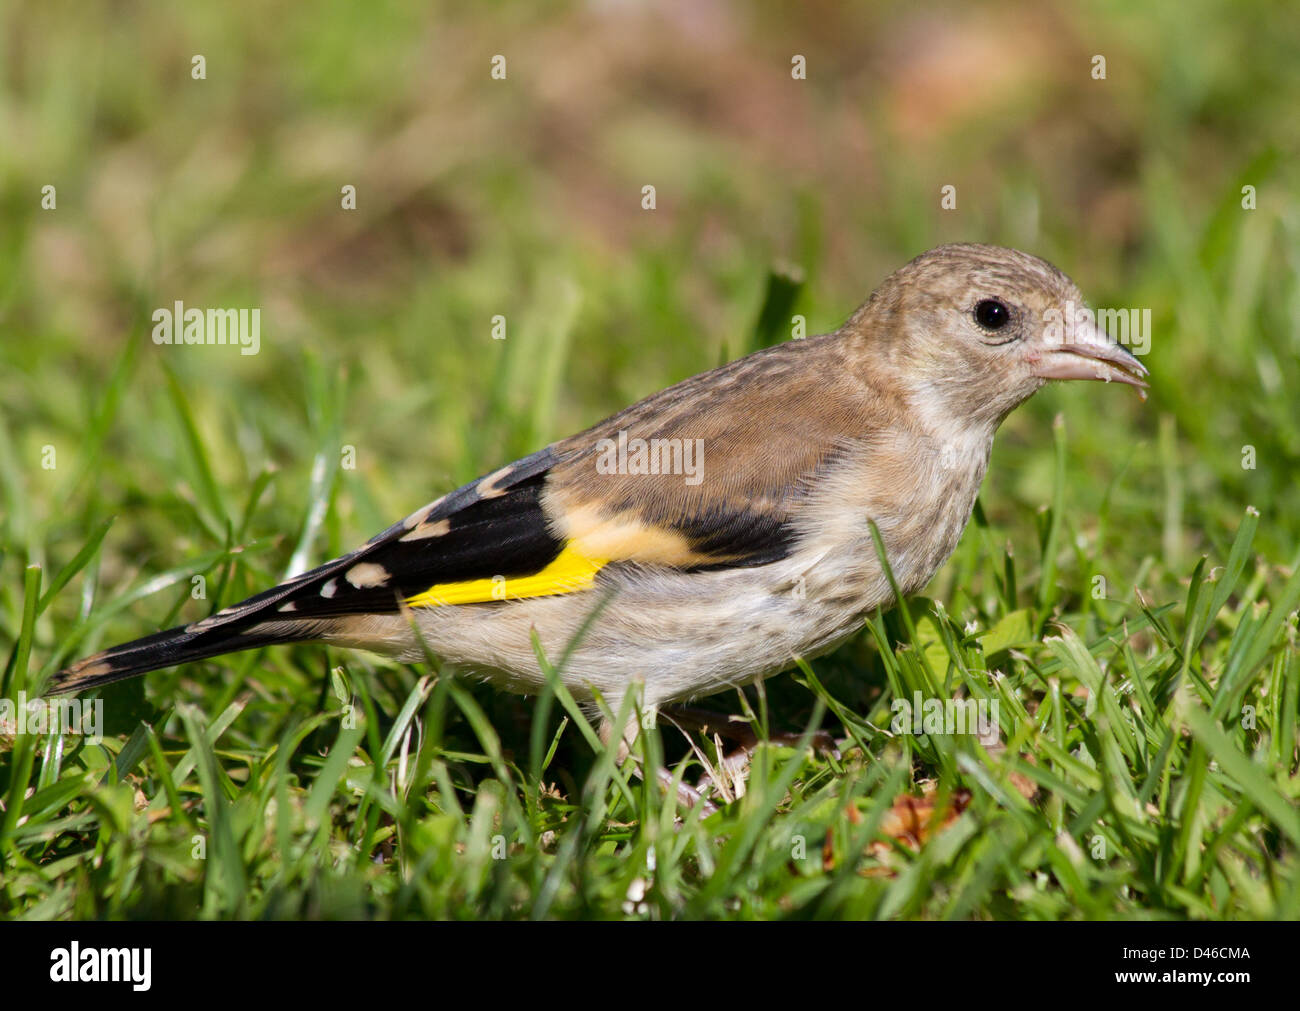 Juvenile Goldfinch feeding on grass Stock Photo